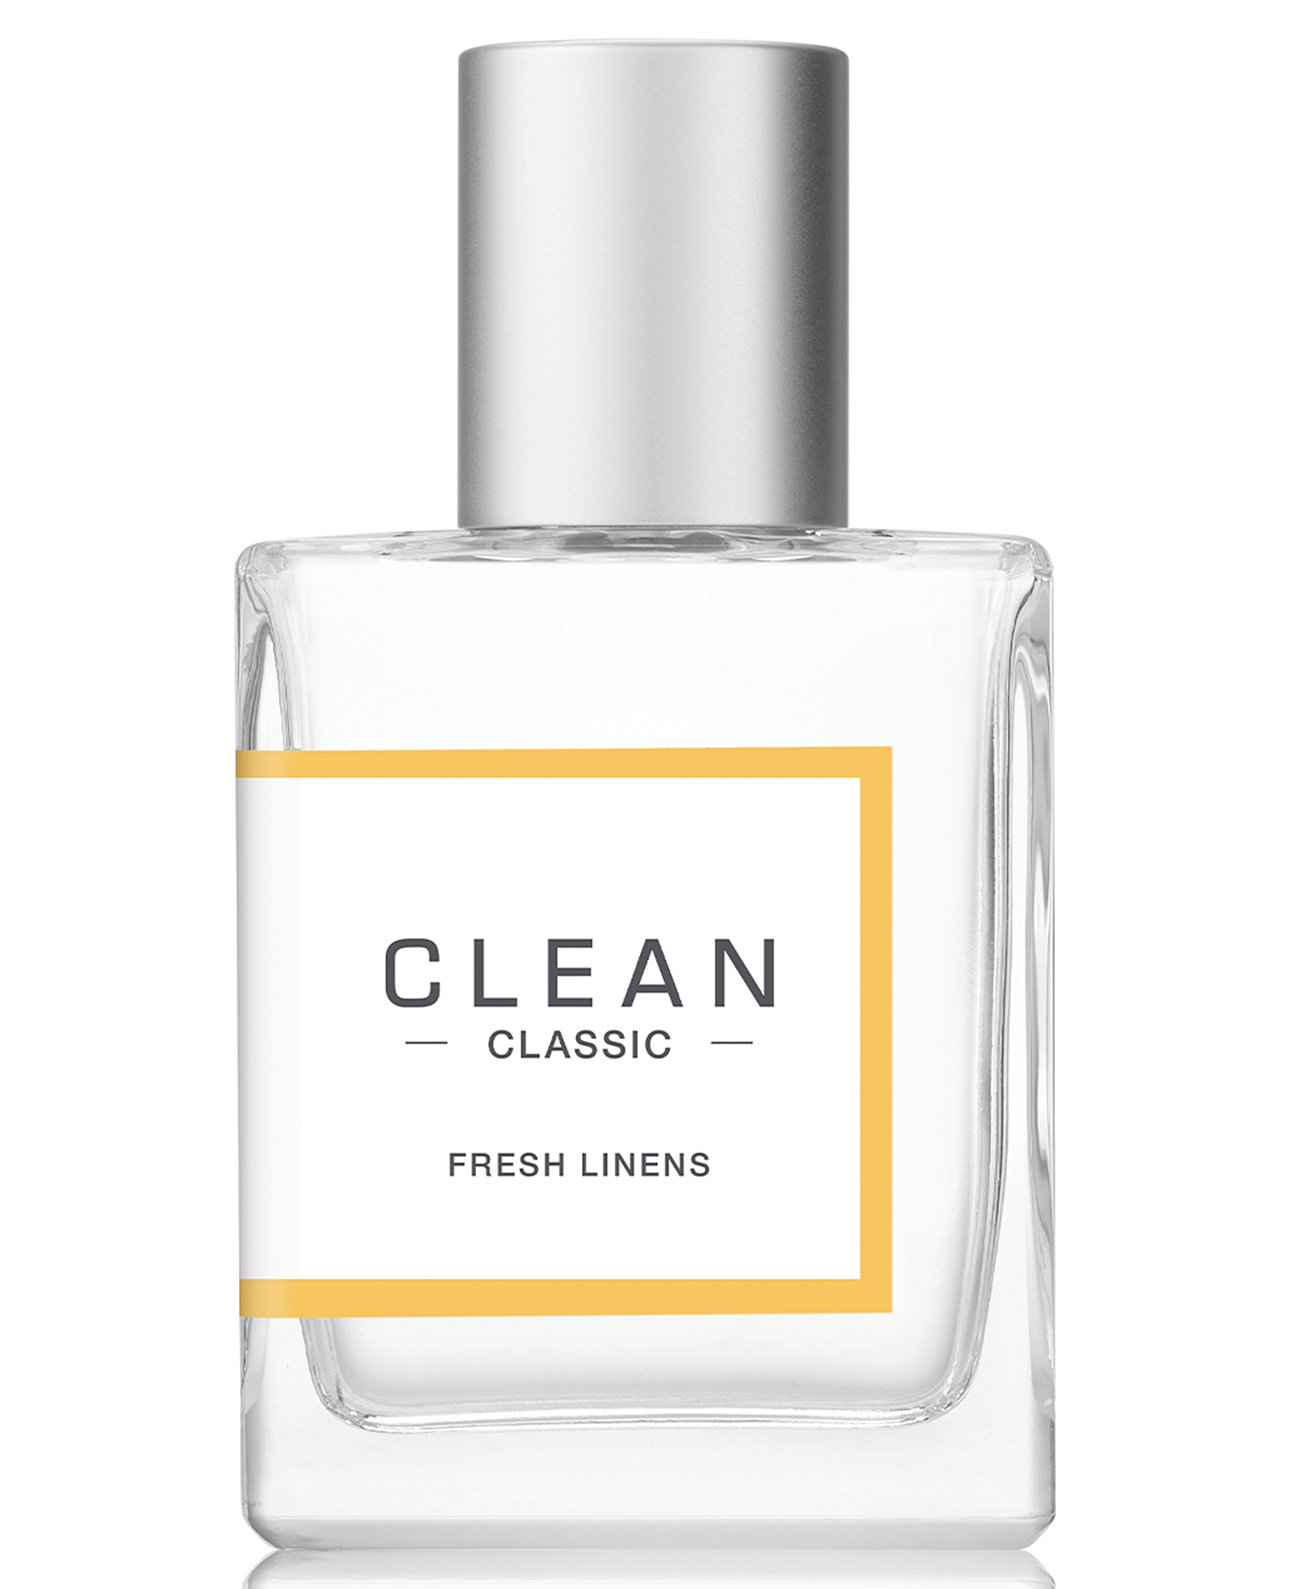 Классический спрей для ароматов Fresh Linens, 1 унция. CLEAN Fragrance